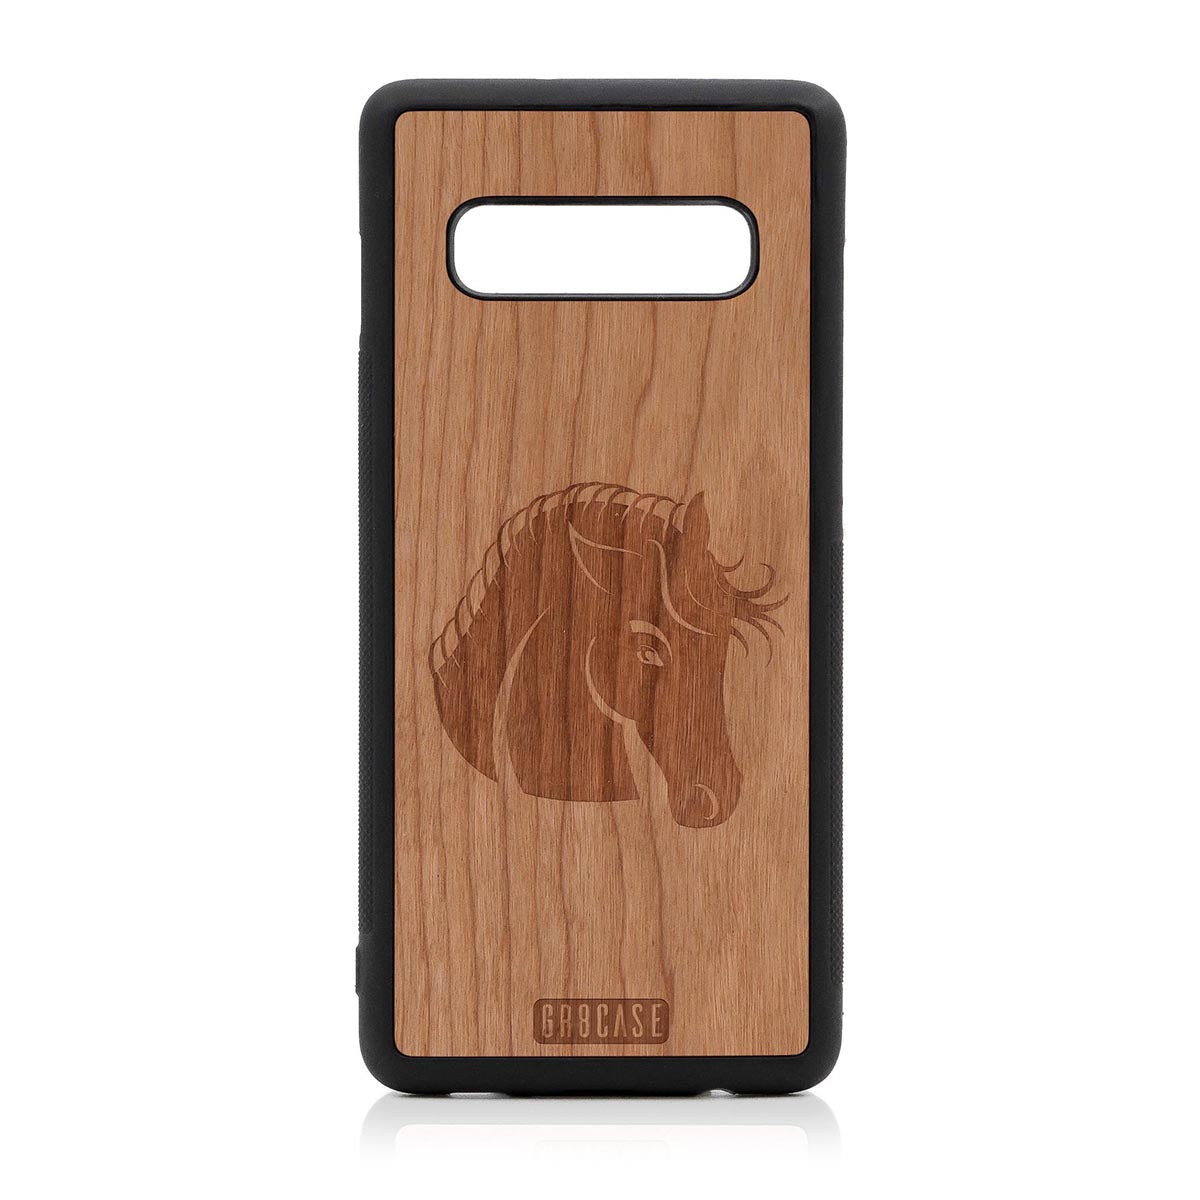 Horse Design Wood Case Samsung Galaxy S10 Plus by GR8CASE